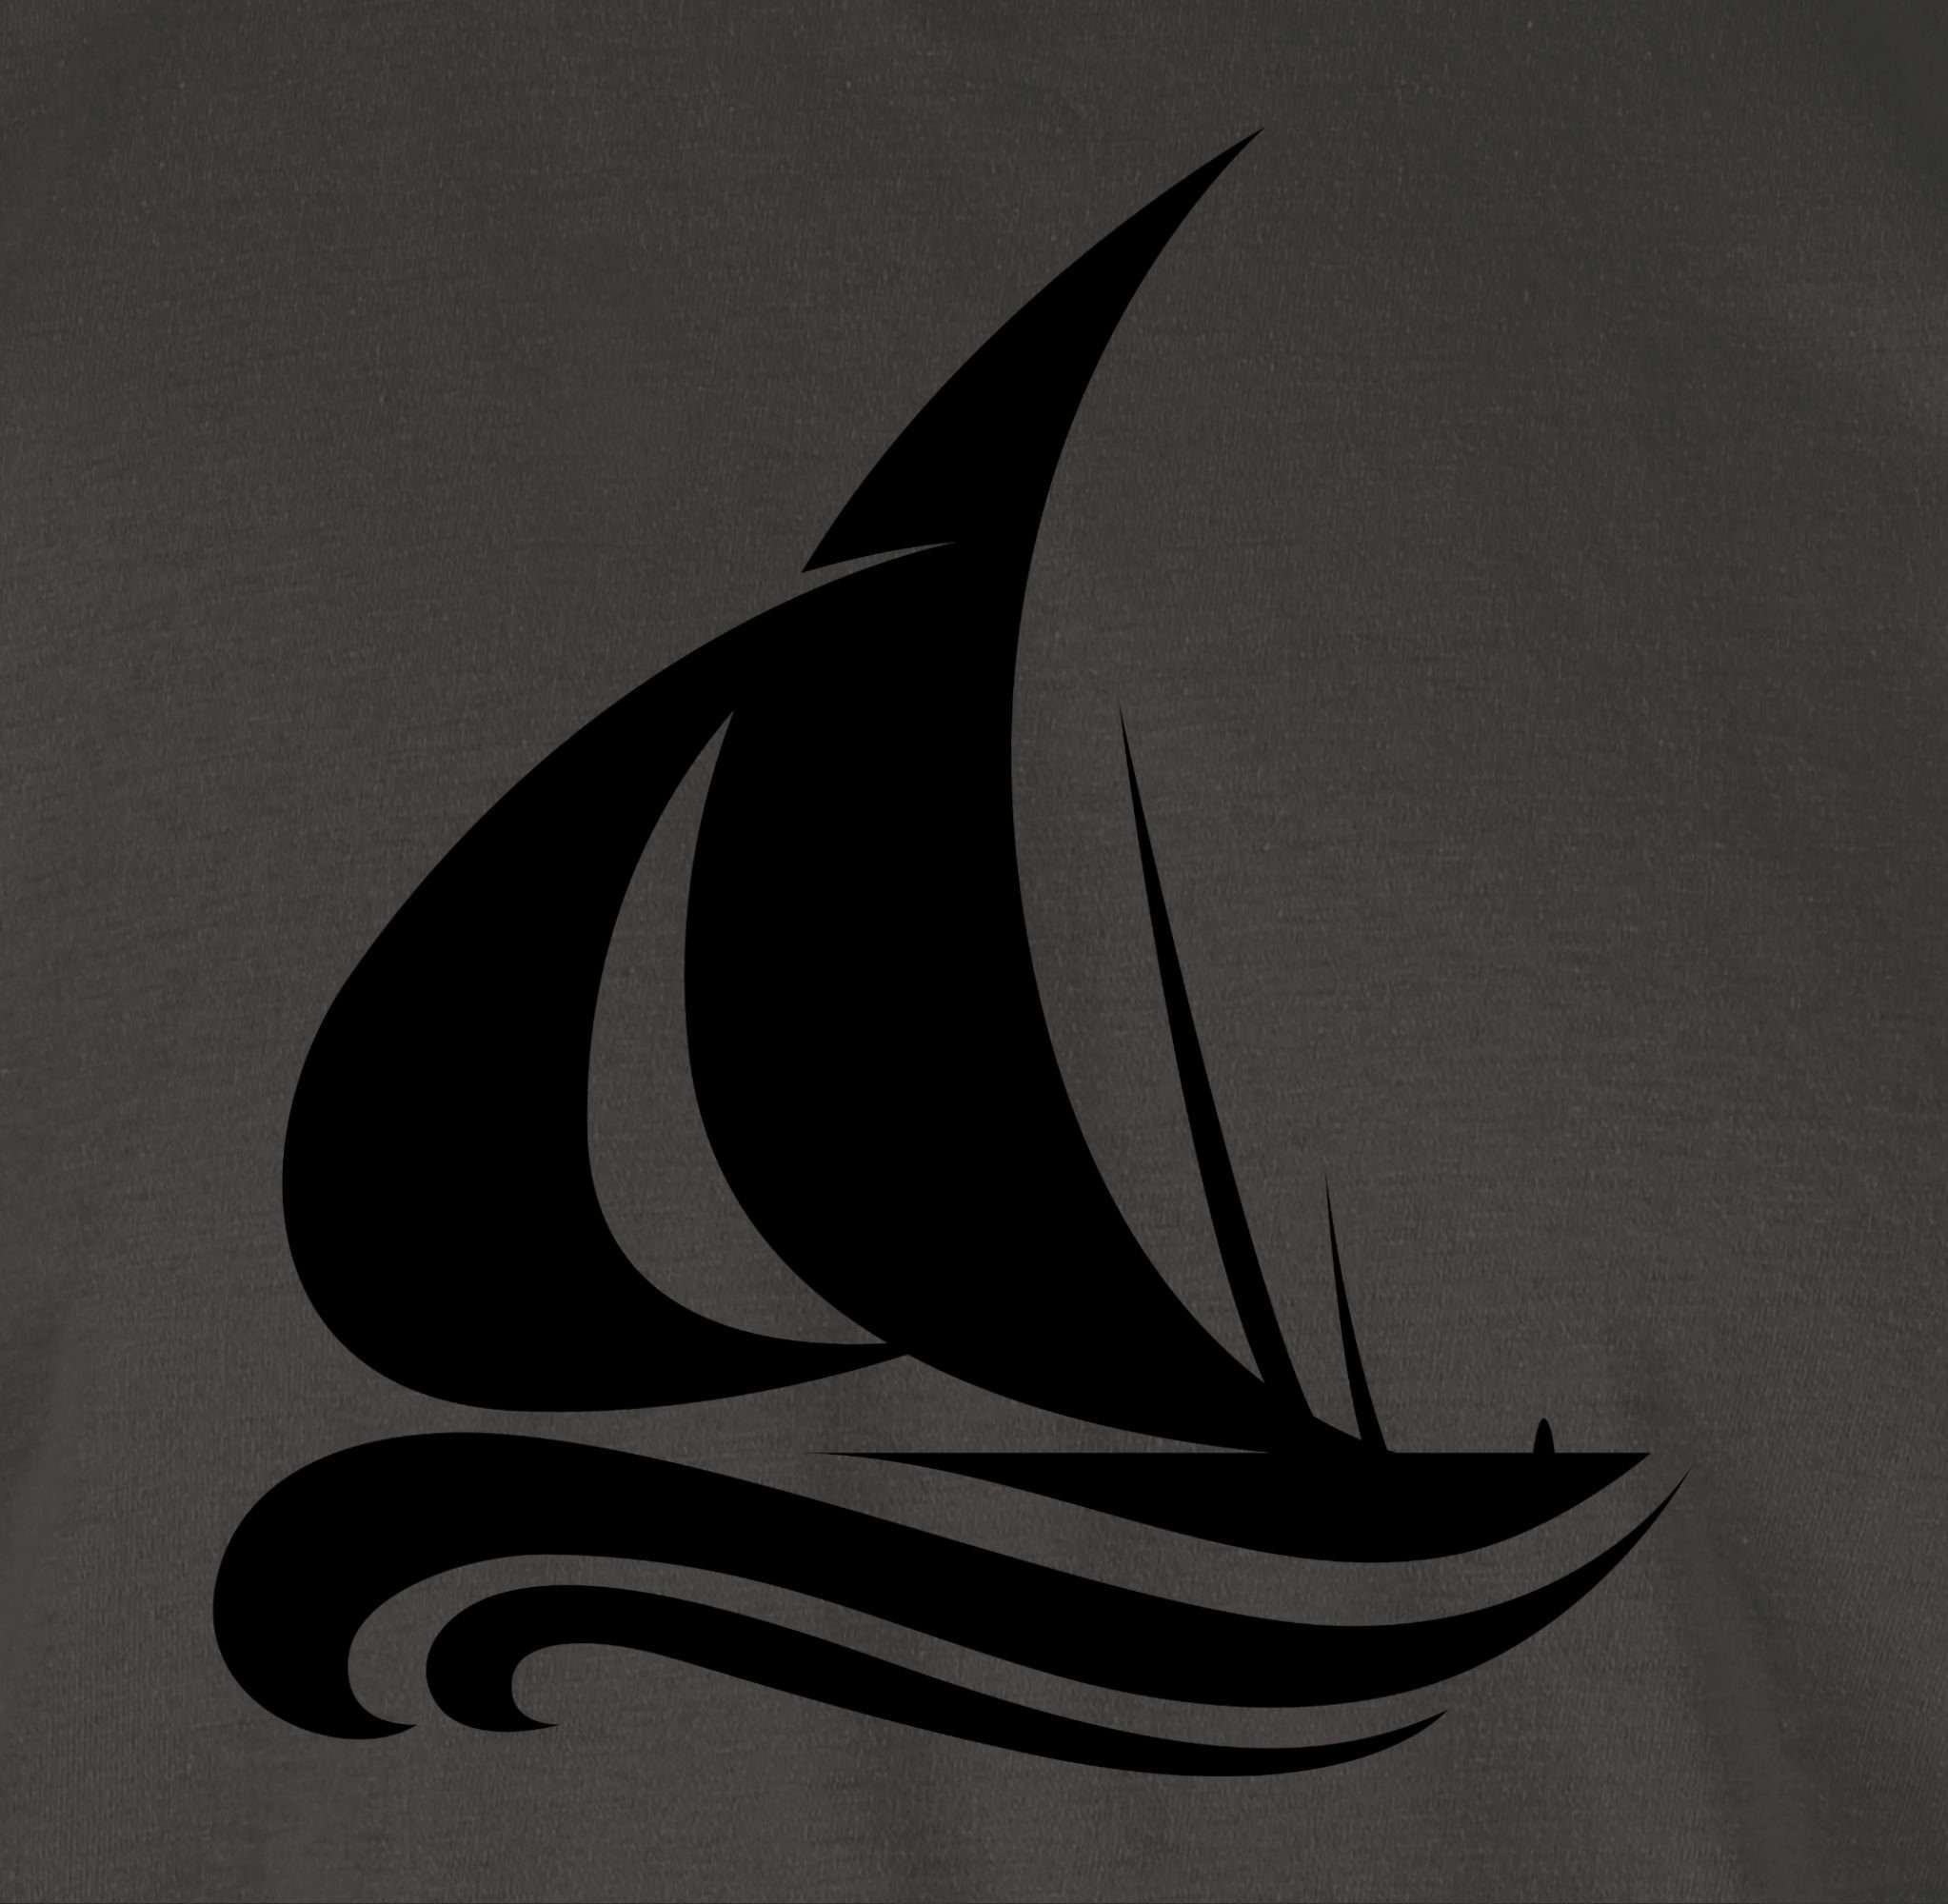 Dunkelgrau Deko Segelboot Schiff & 1 Boot Shirtracer T-Shirt Wellen